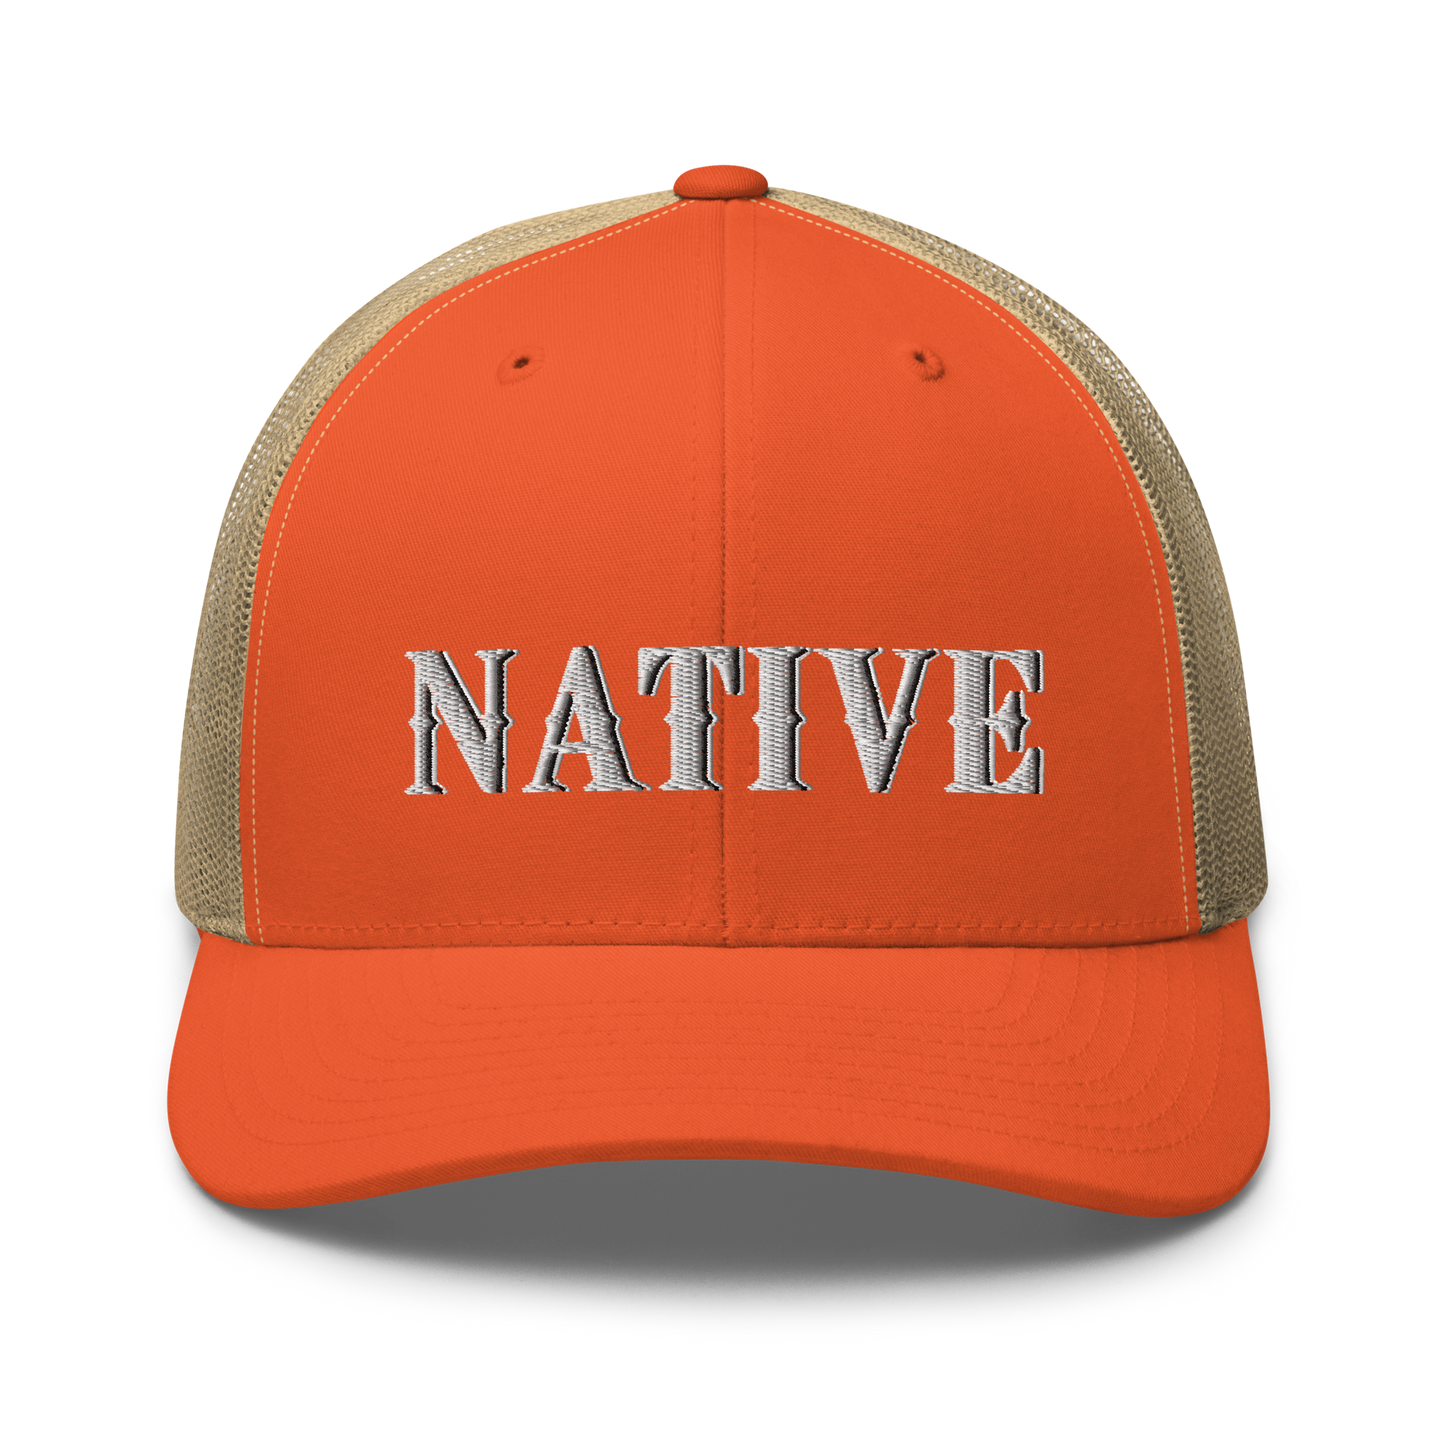 Native Retro Trucker Hat